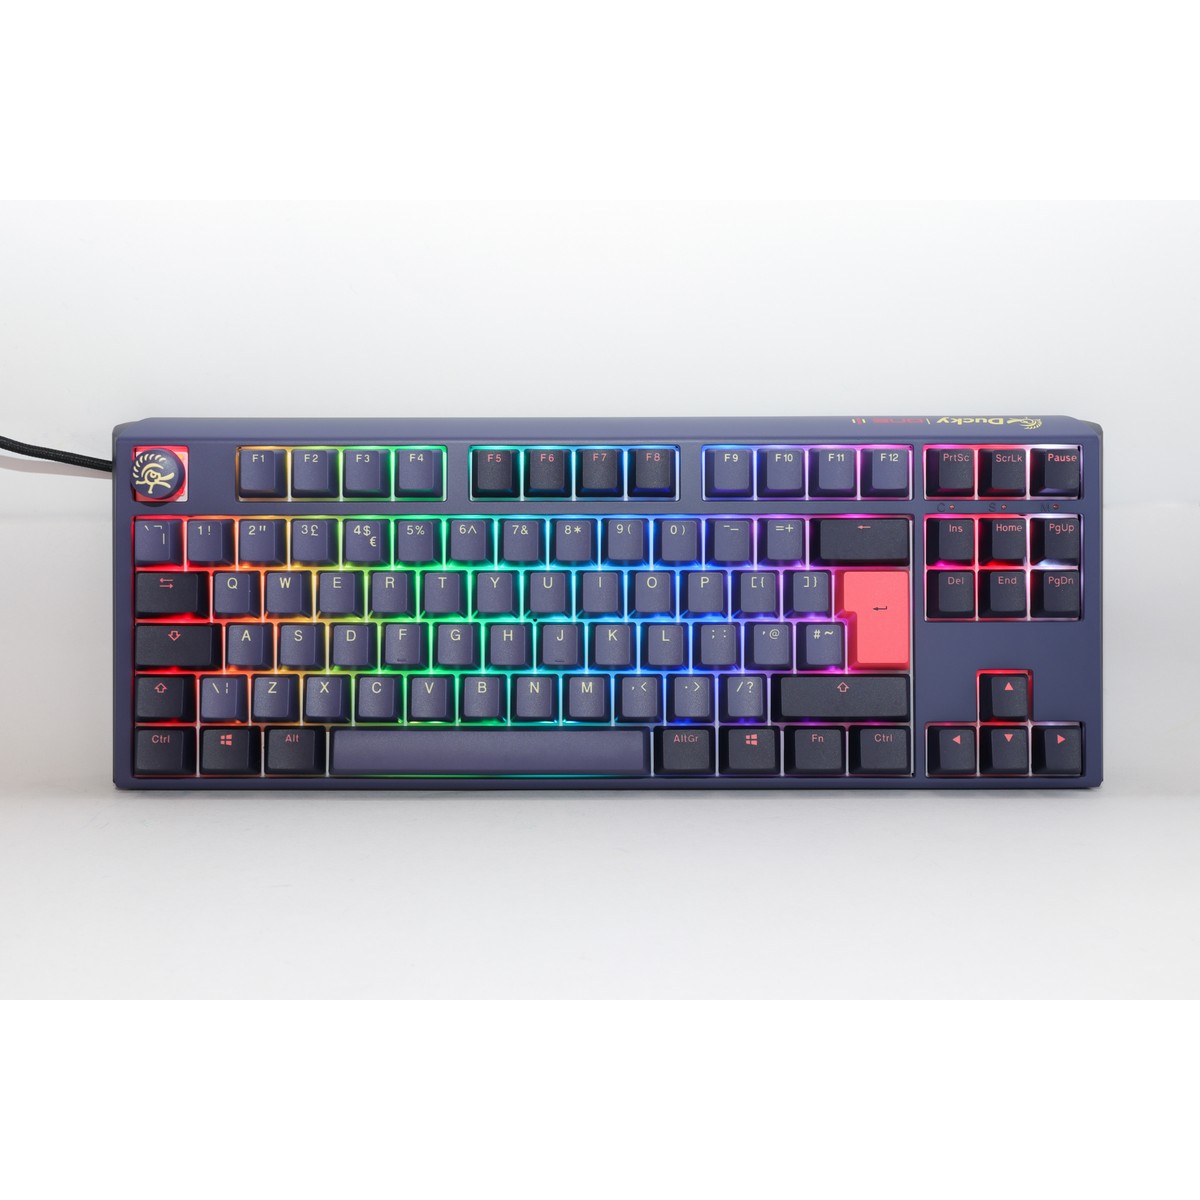 Ducky One 3 Cosmic TKL 80% USB RGB Mechanical Gaming Keyboard Cherry MX Brown Switch - UK Layout